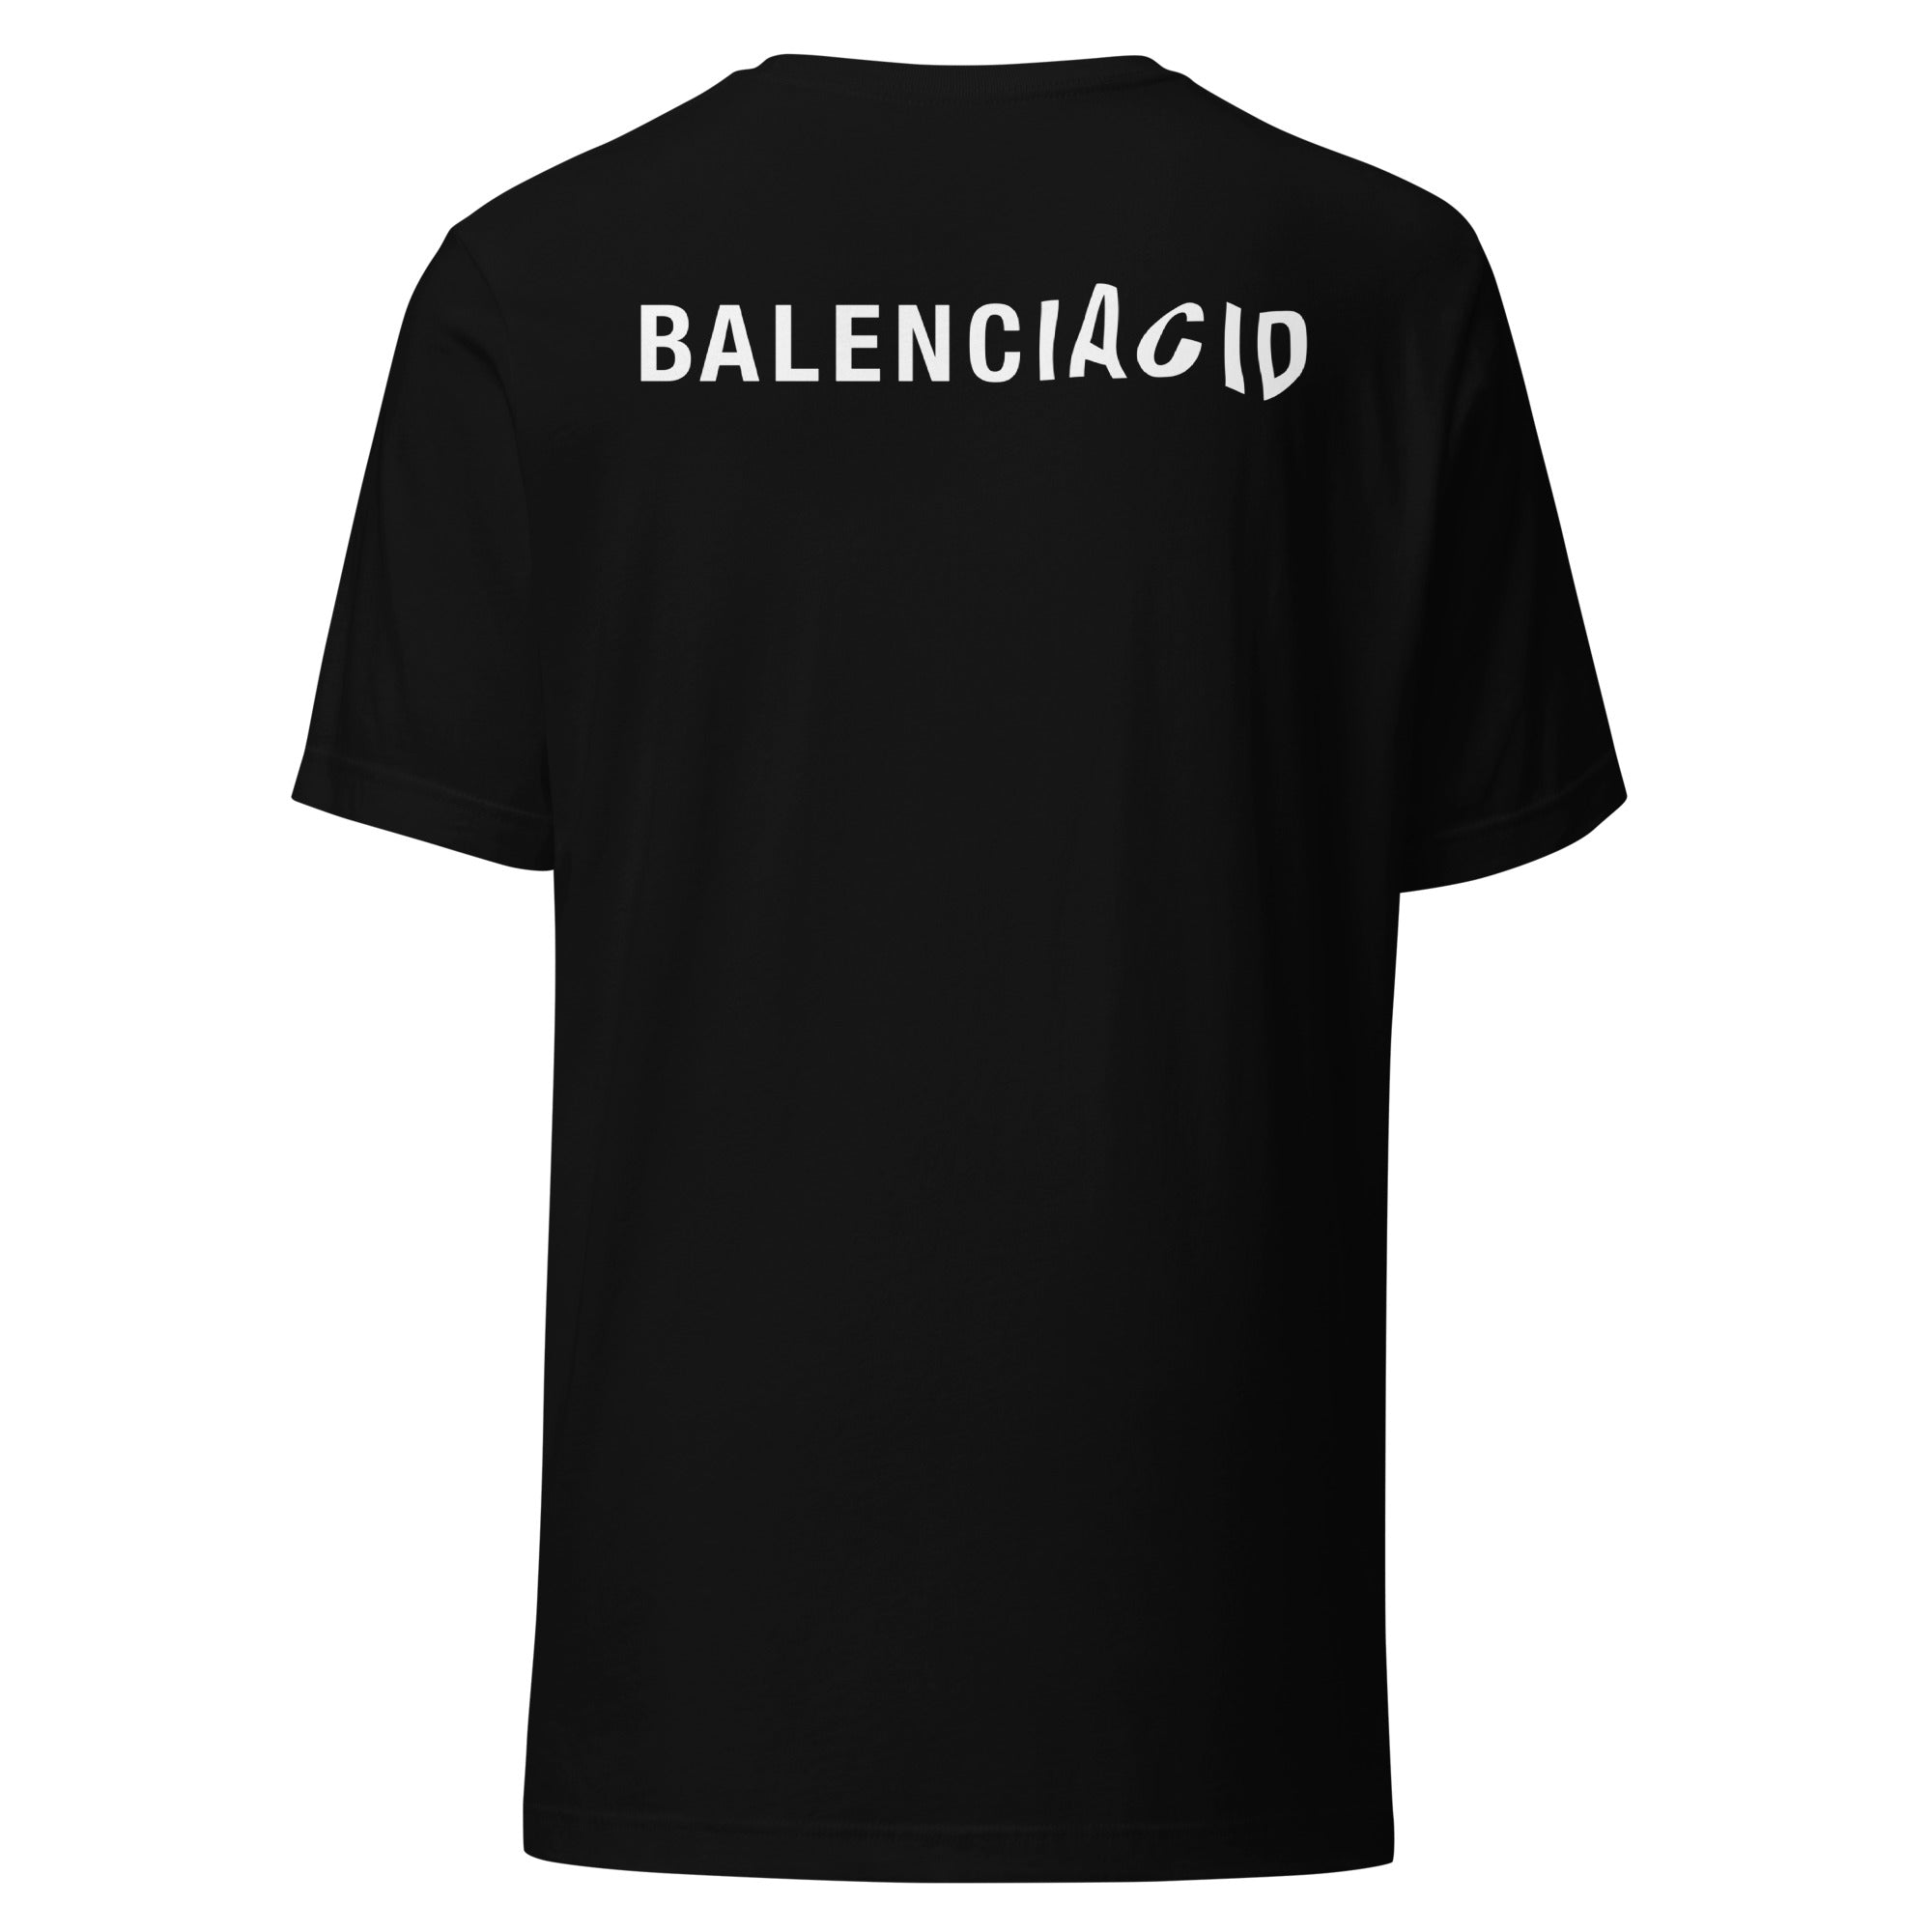 Balenciacid Unisex t-shirt